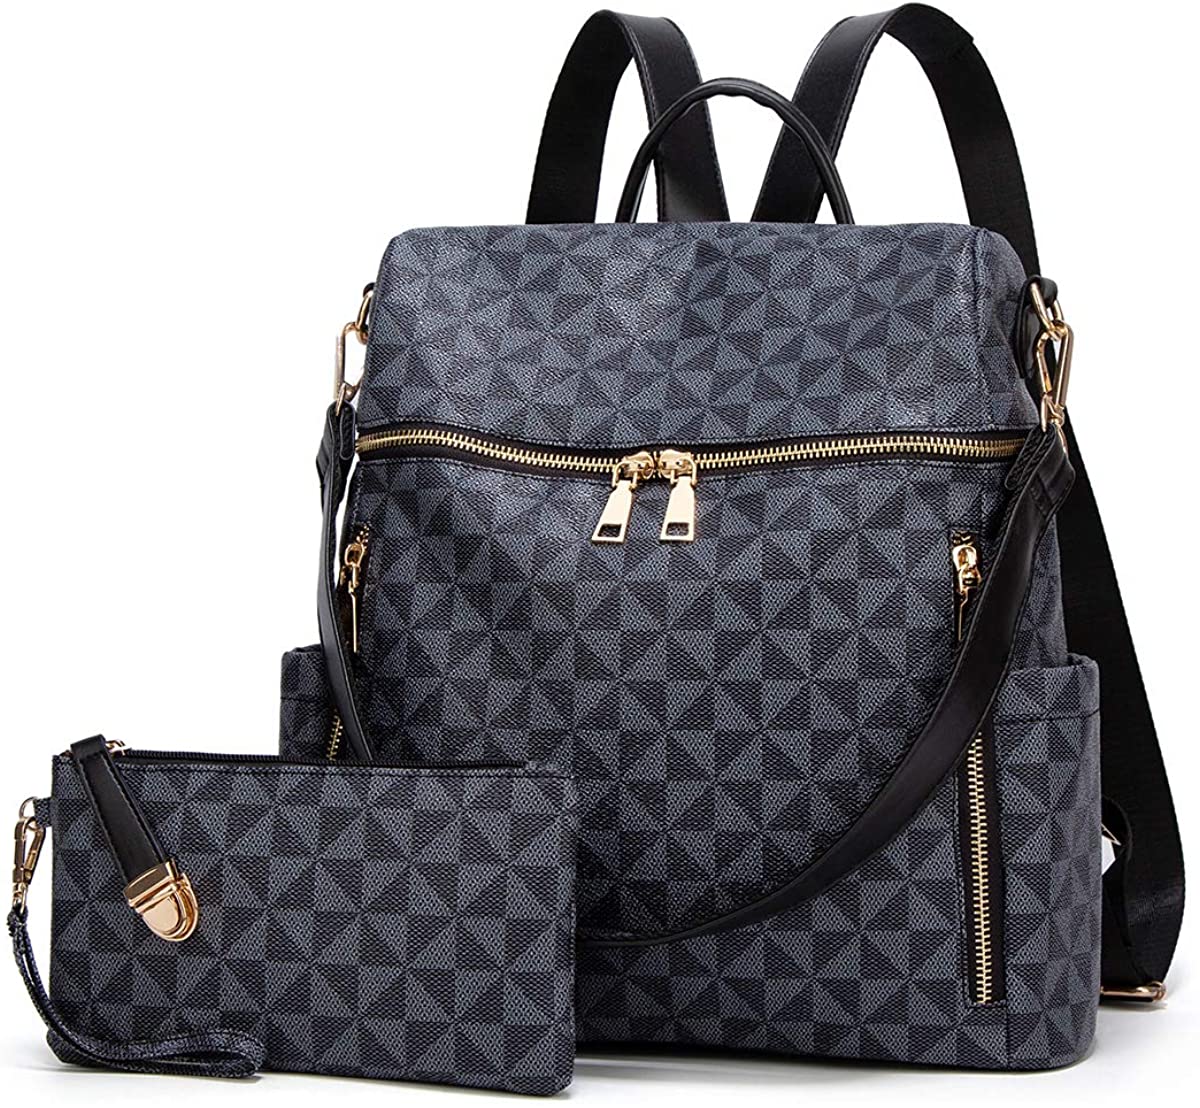 Backpacks for Women Fashion PU Leather Bag Multipurpose Design